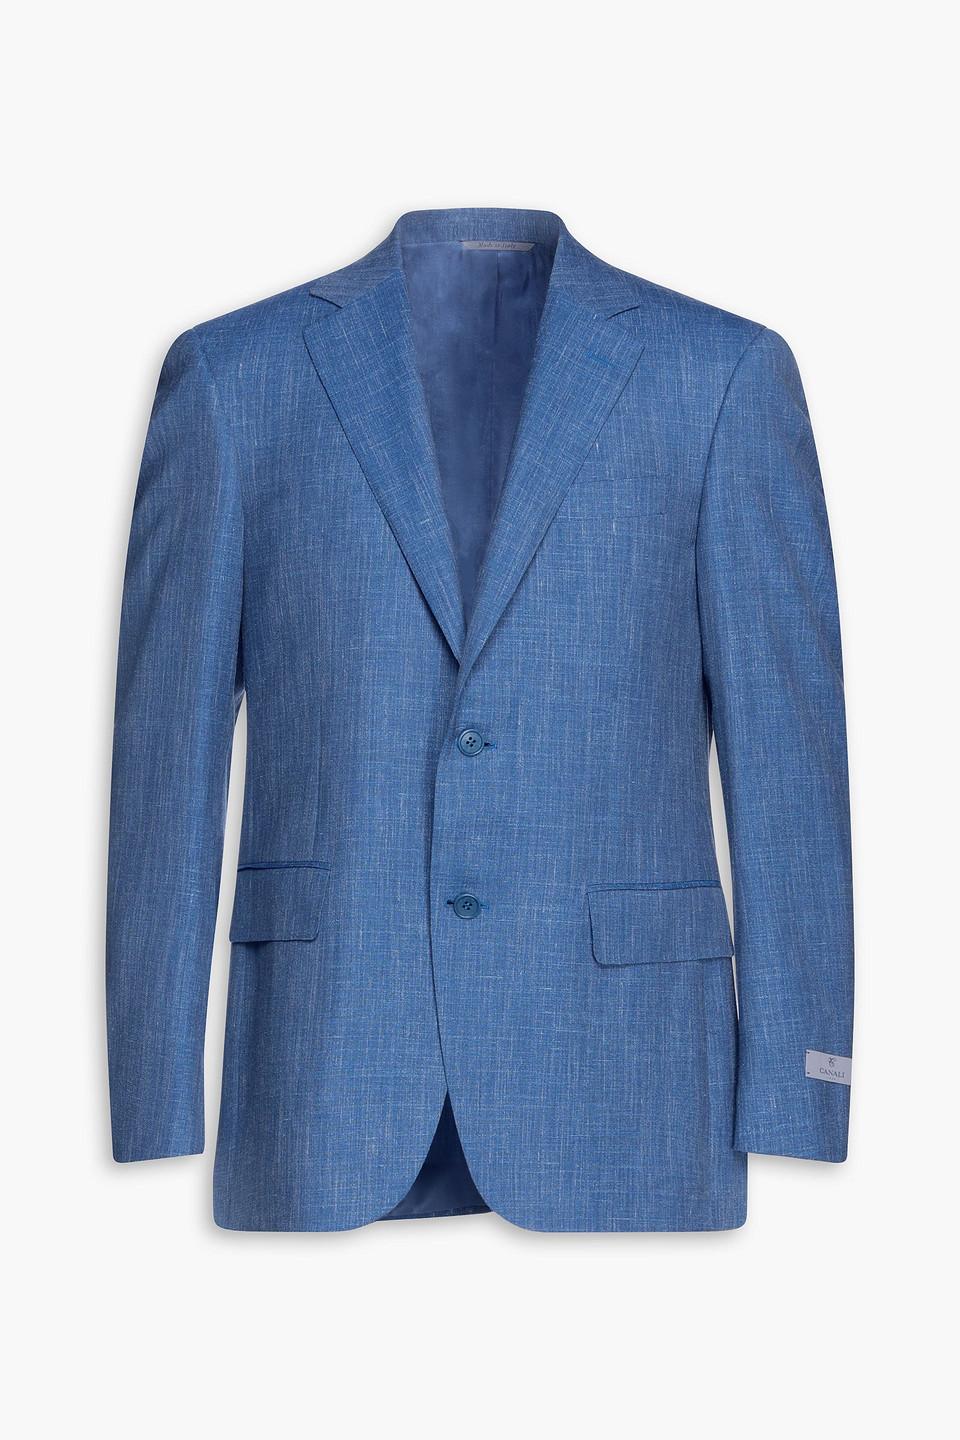 Canali Slub Wool, Silk And Linen-blend Blazer in Blue for Men | Lyst